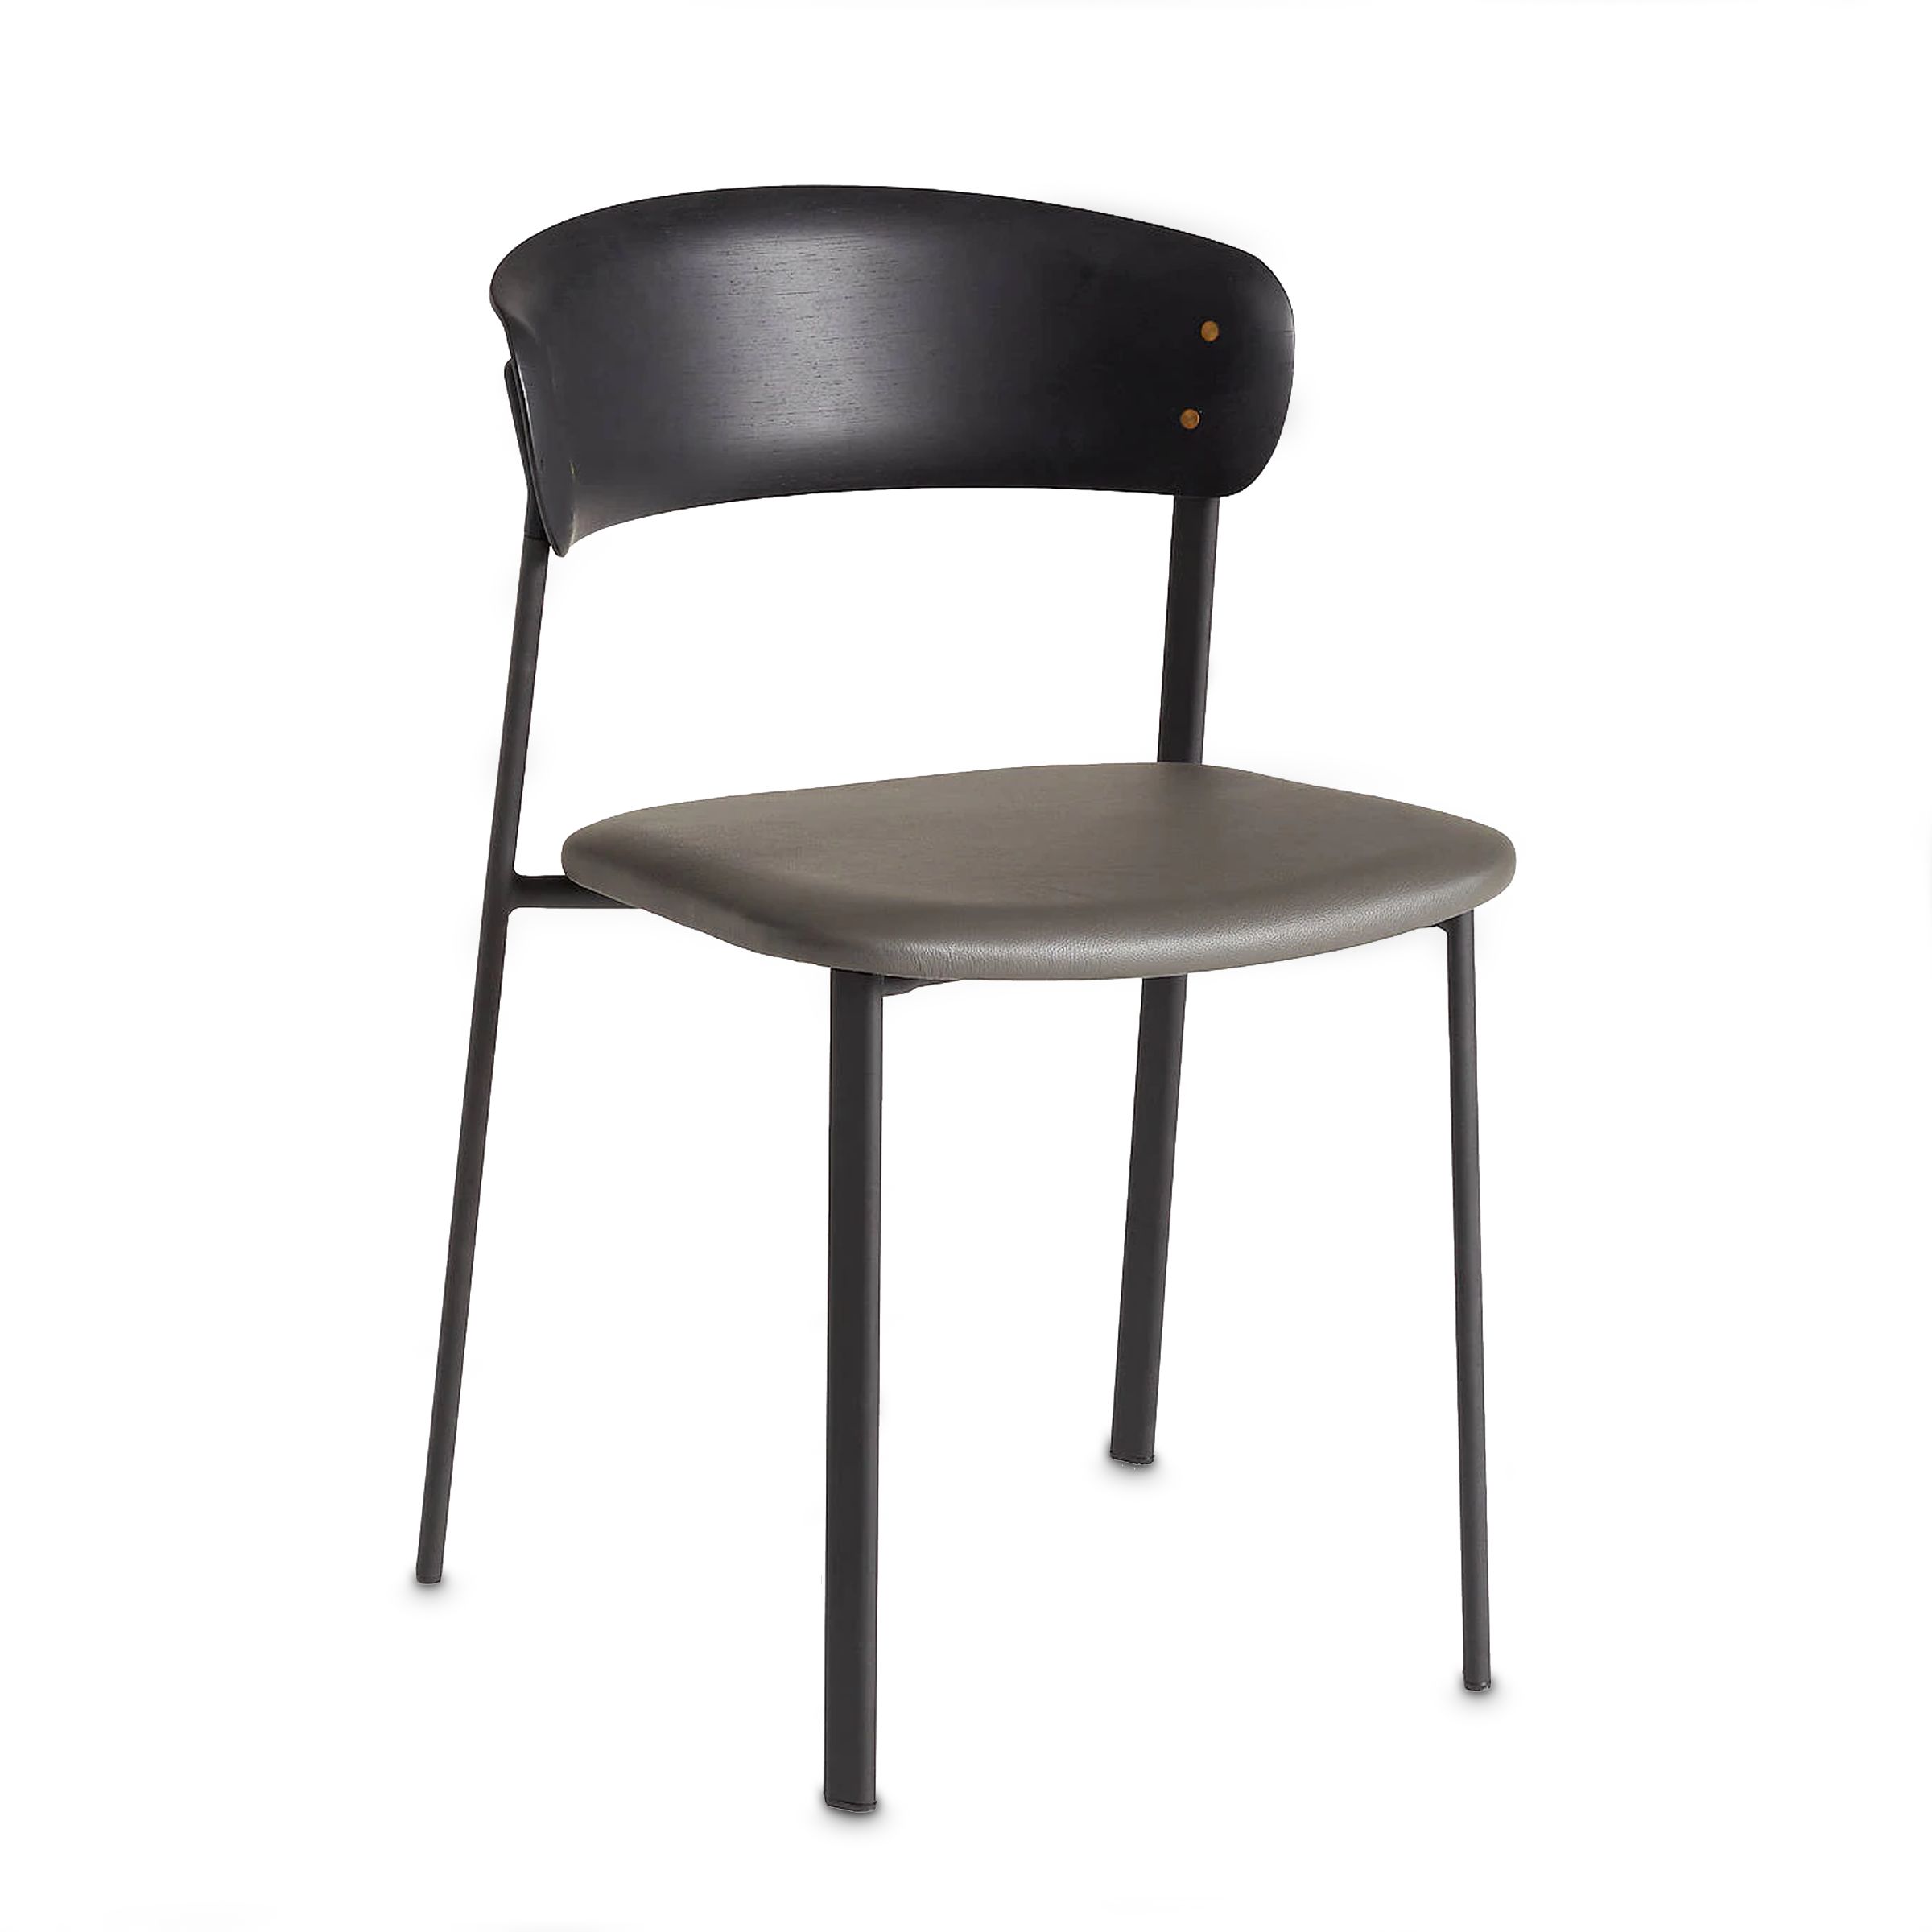 John Lewis & Partners Contour Dining Chair, Black/Grey